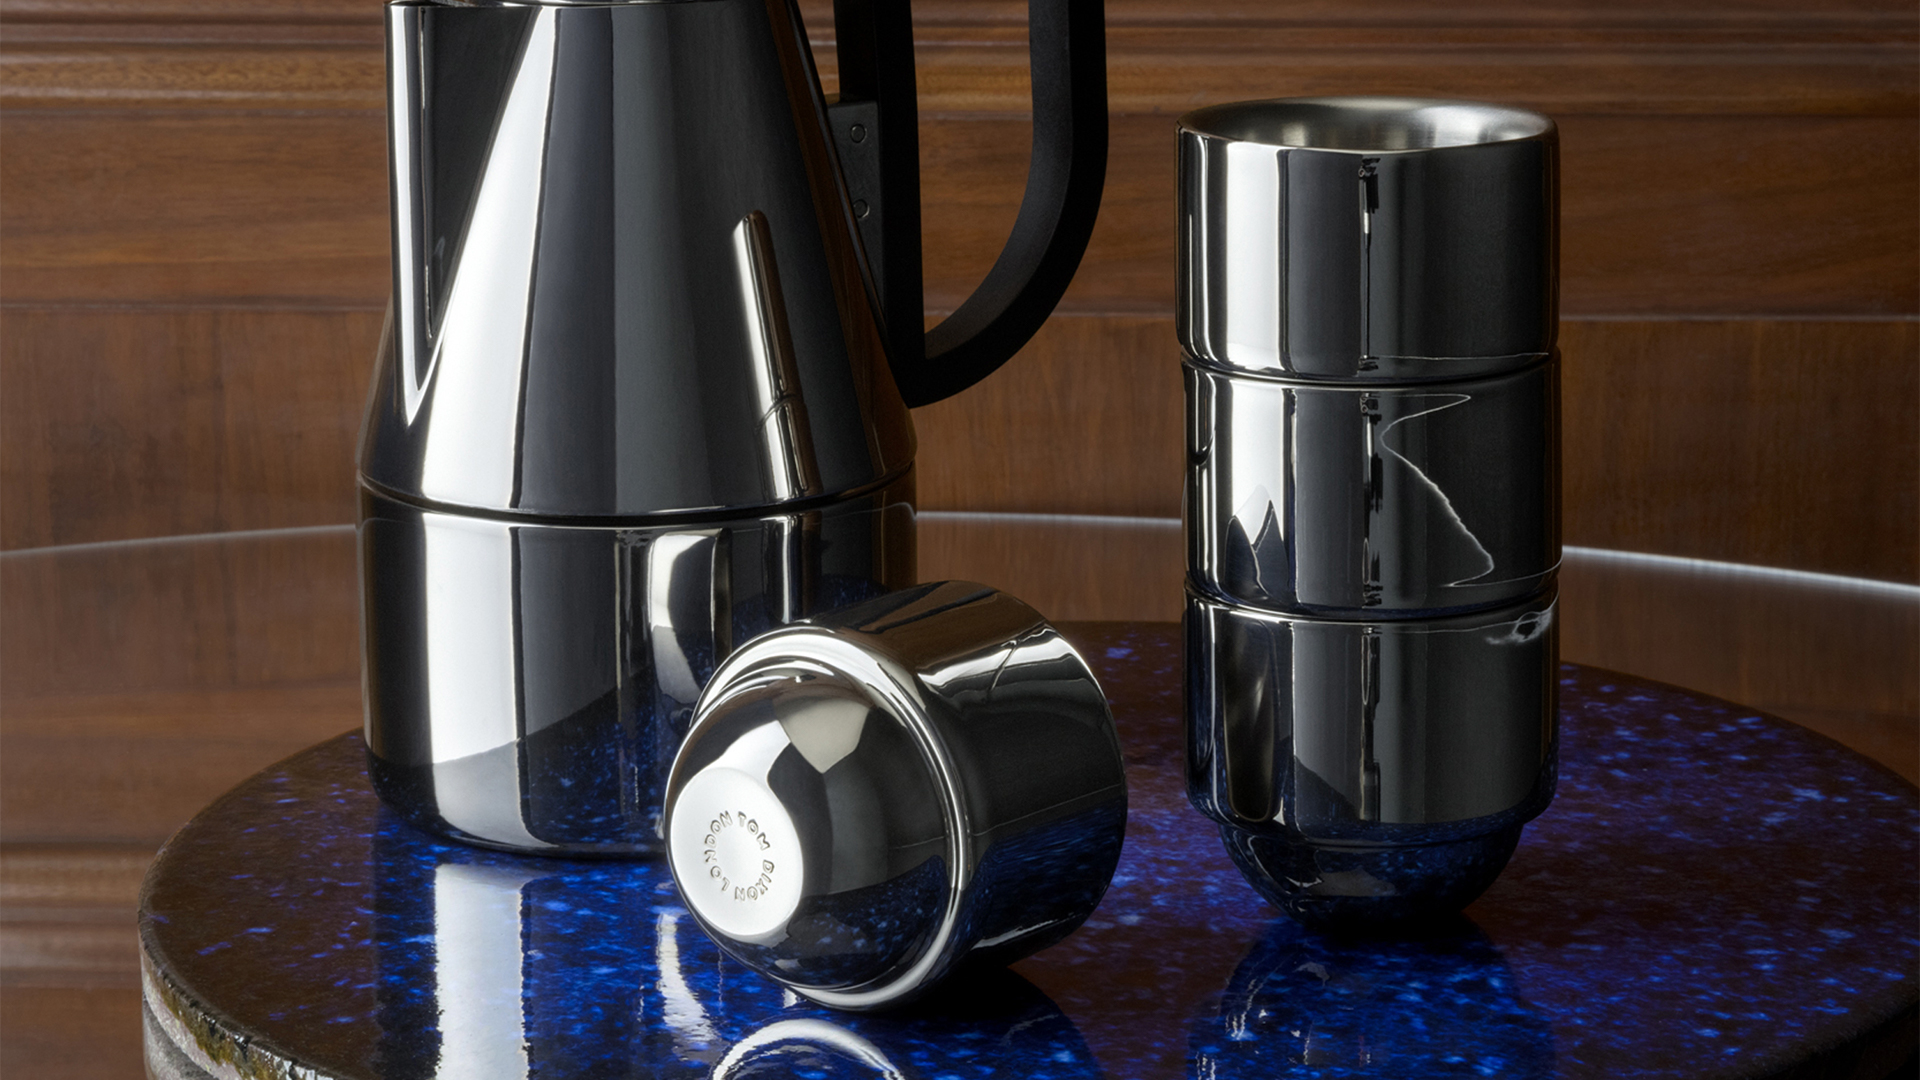 Brew Espresso Cups, Lifestyle